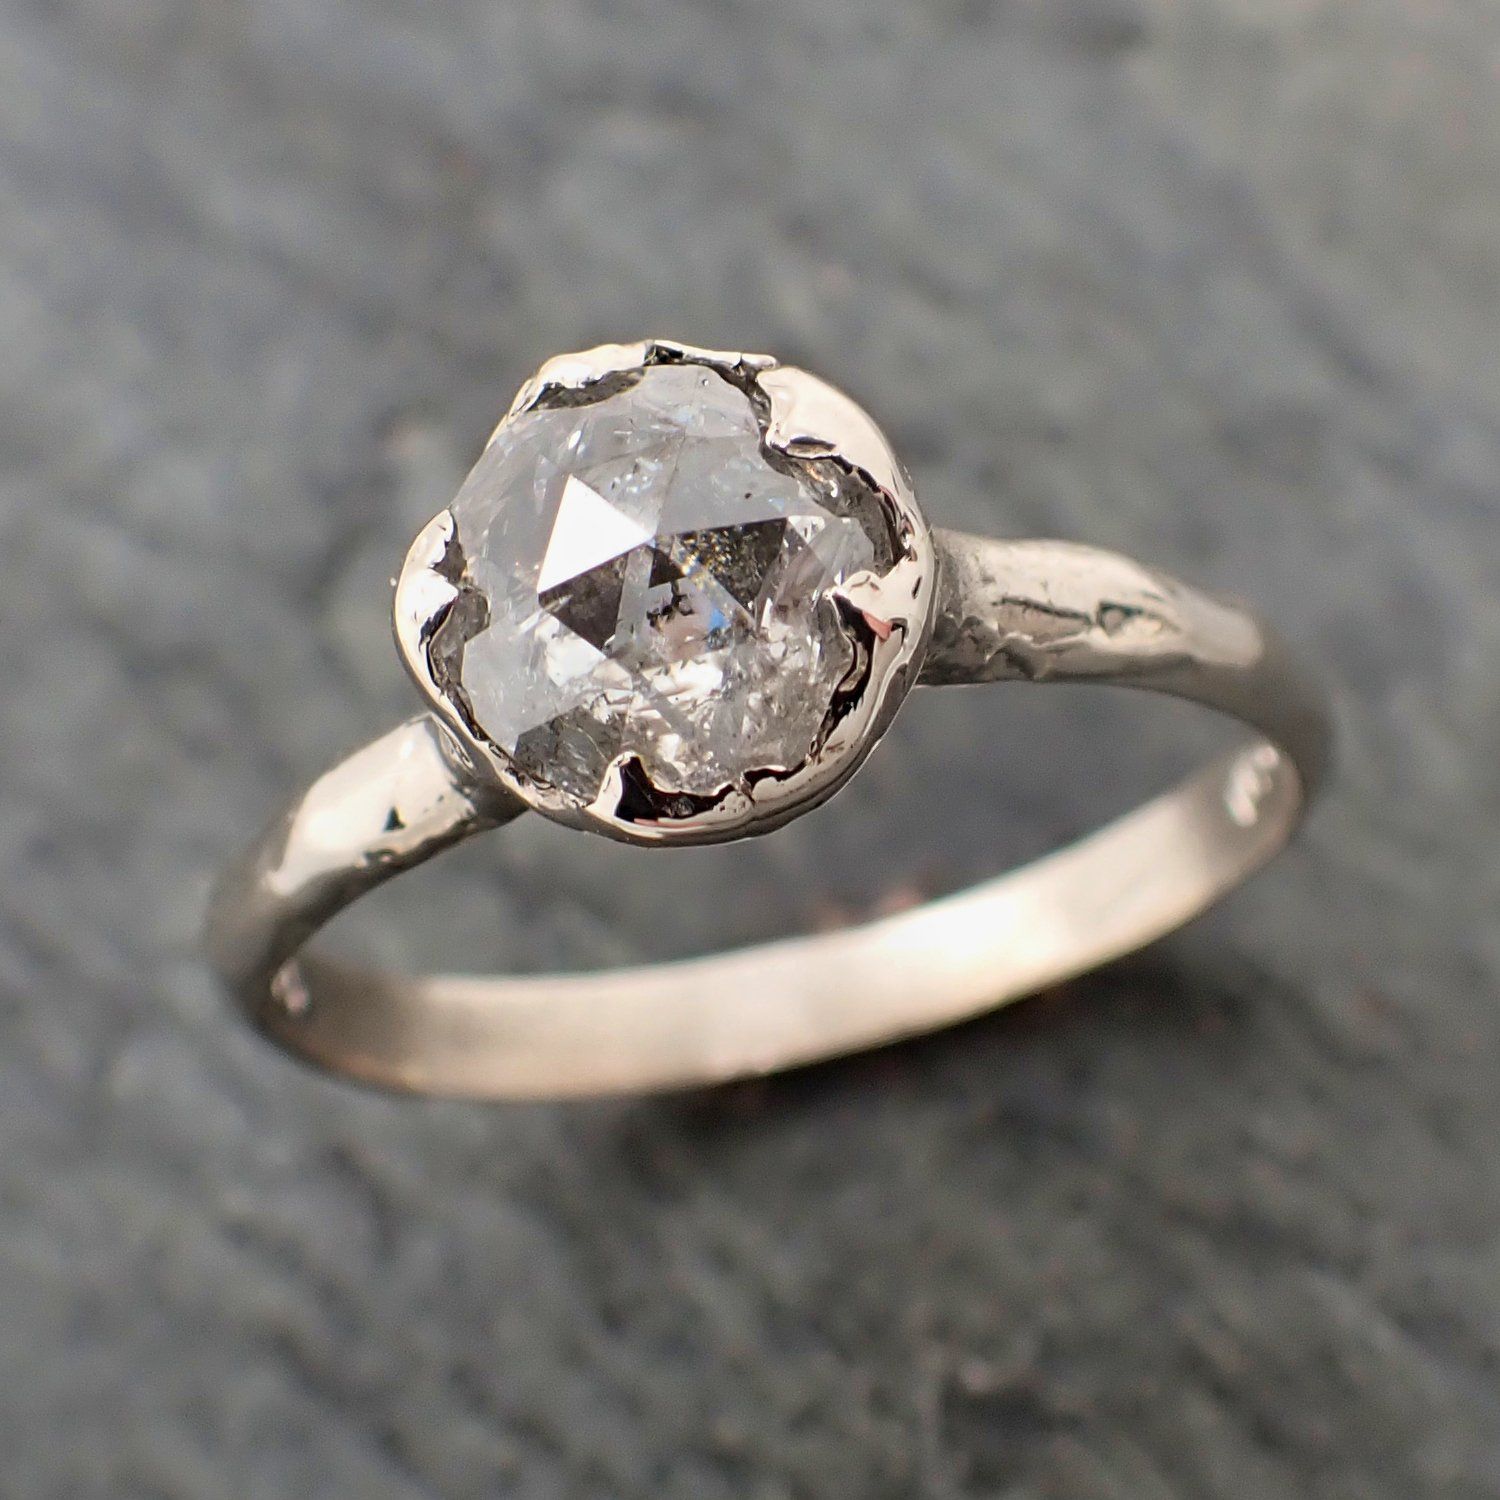 Fancy cut salt and pepper Diamond Solitaire Engagement 14k White Gold Wedding Ring byAngeline 2295